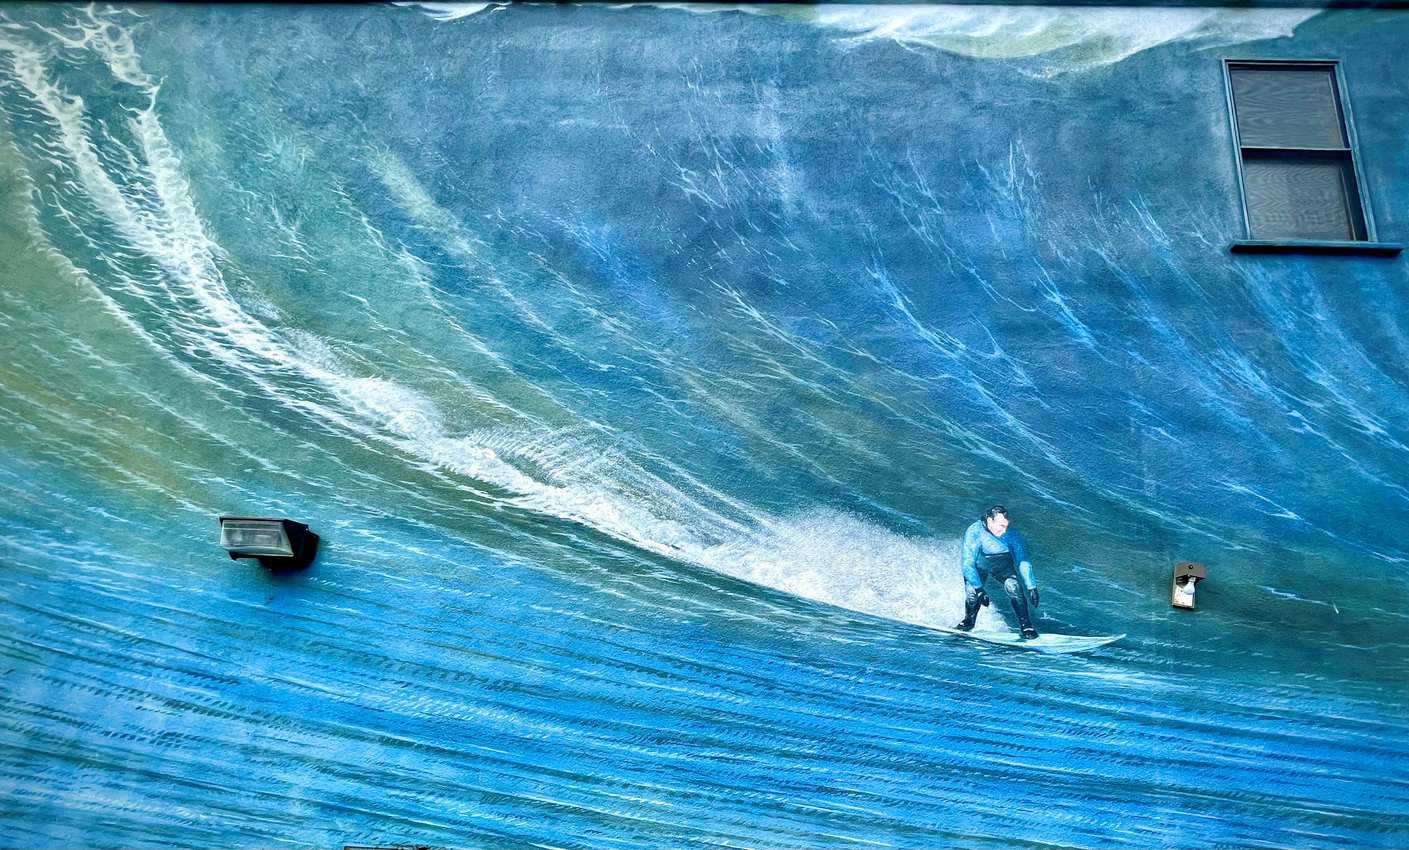 Mural in Half Moon Bay of surfers in California.